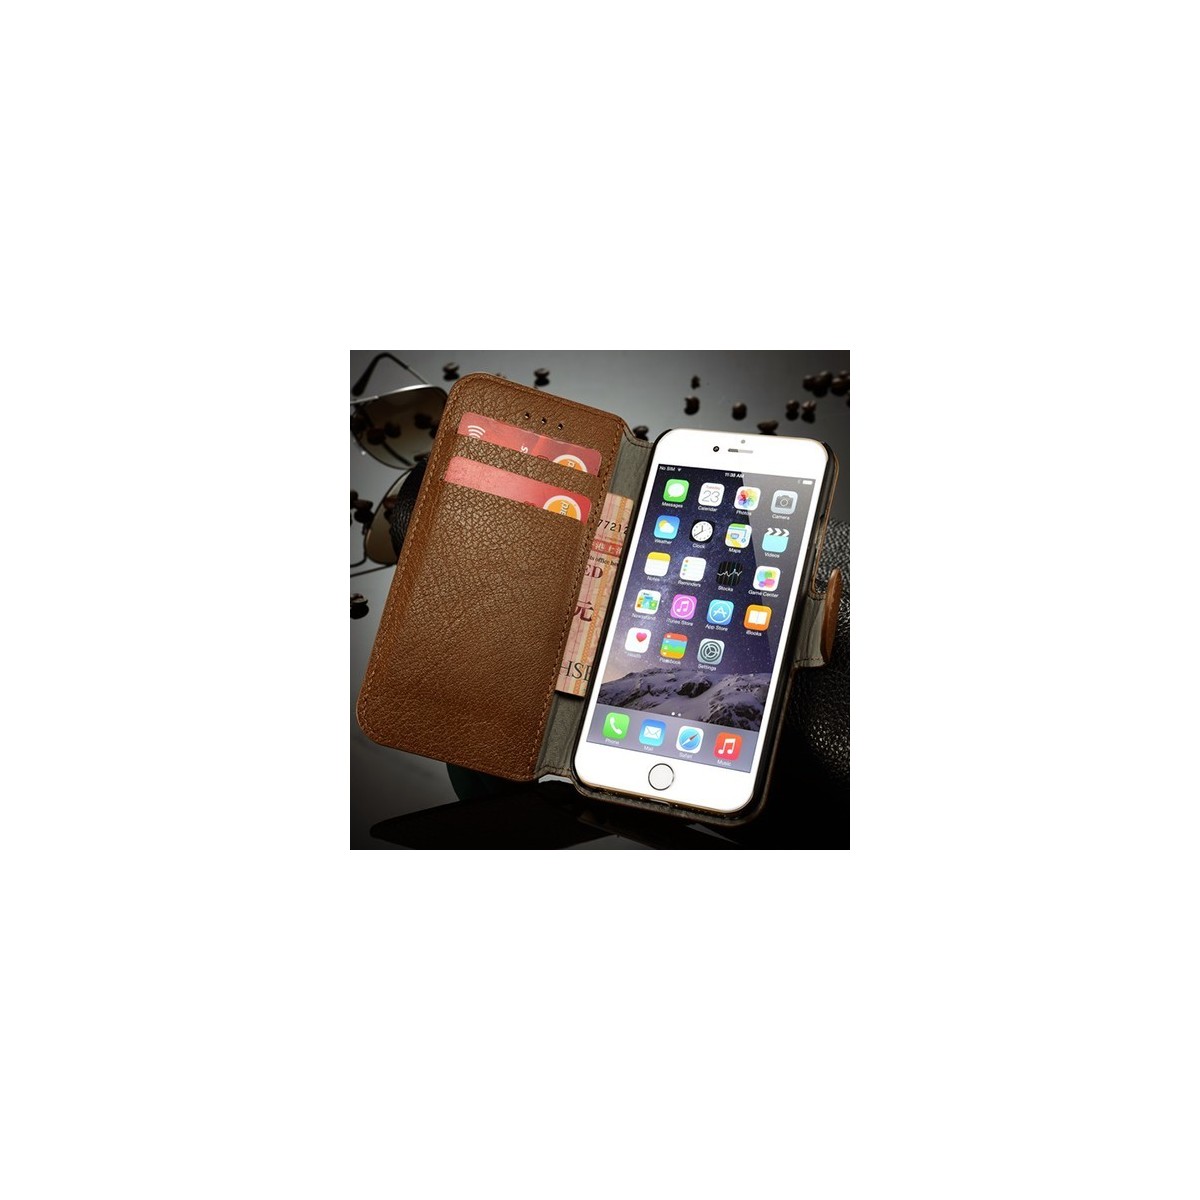 Etui Book type marron clair pour iPhone 6 / 6s - CaseMe